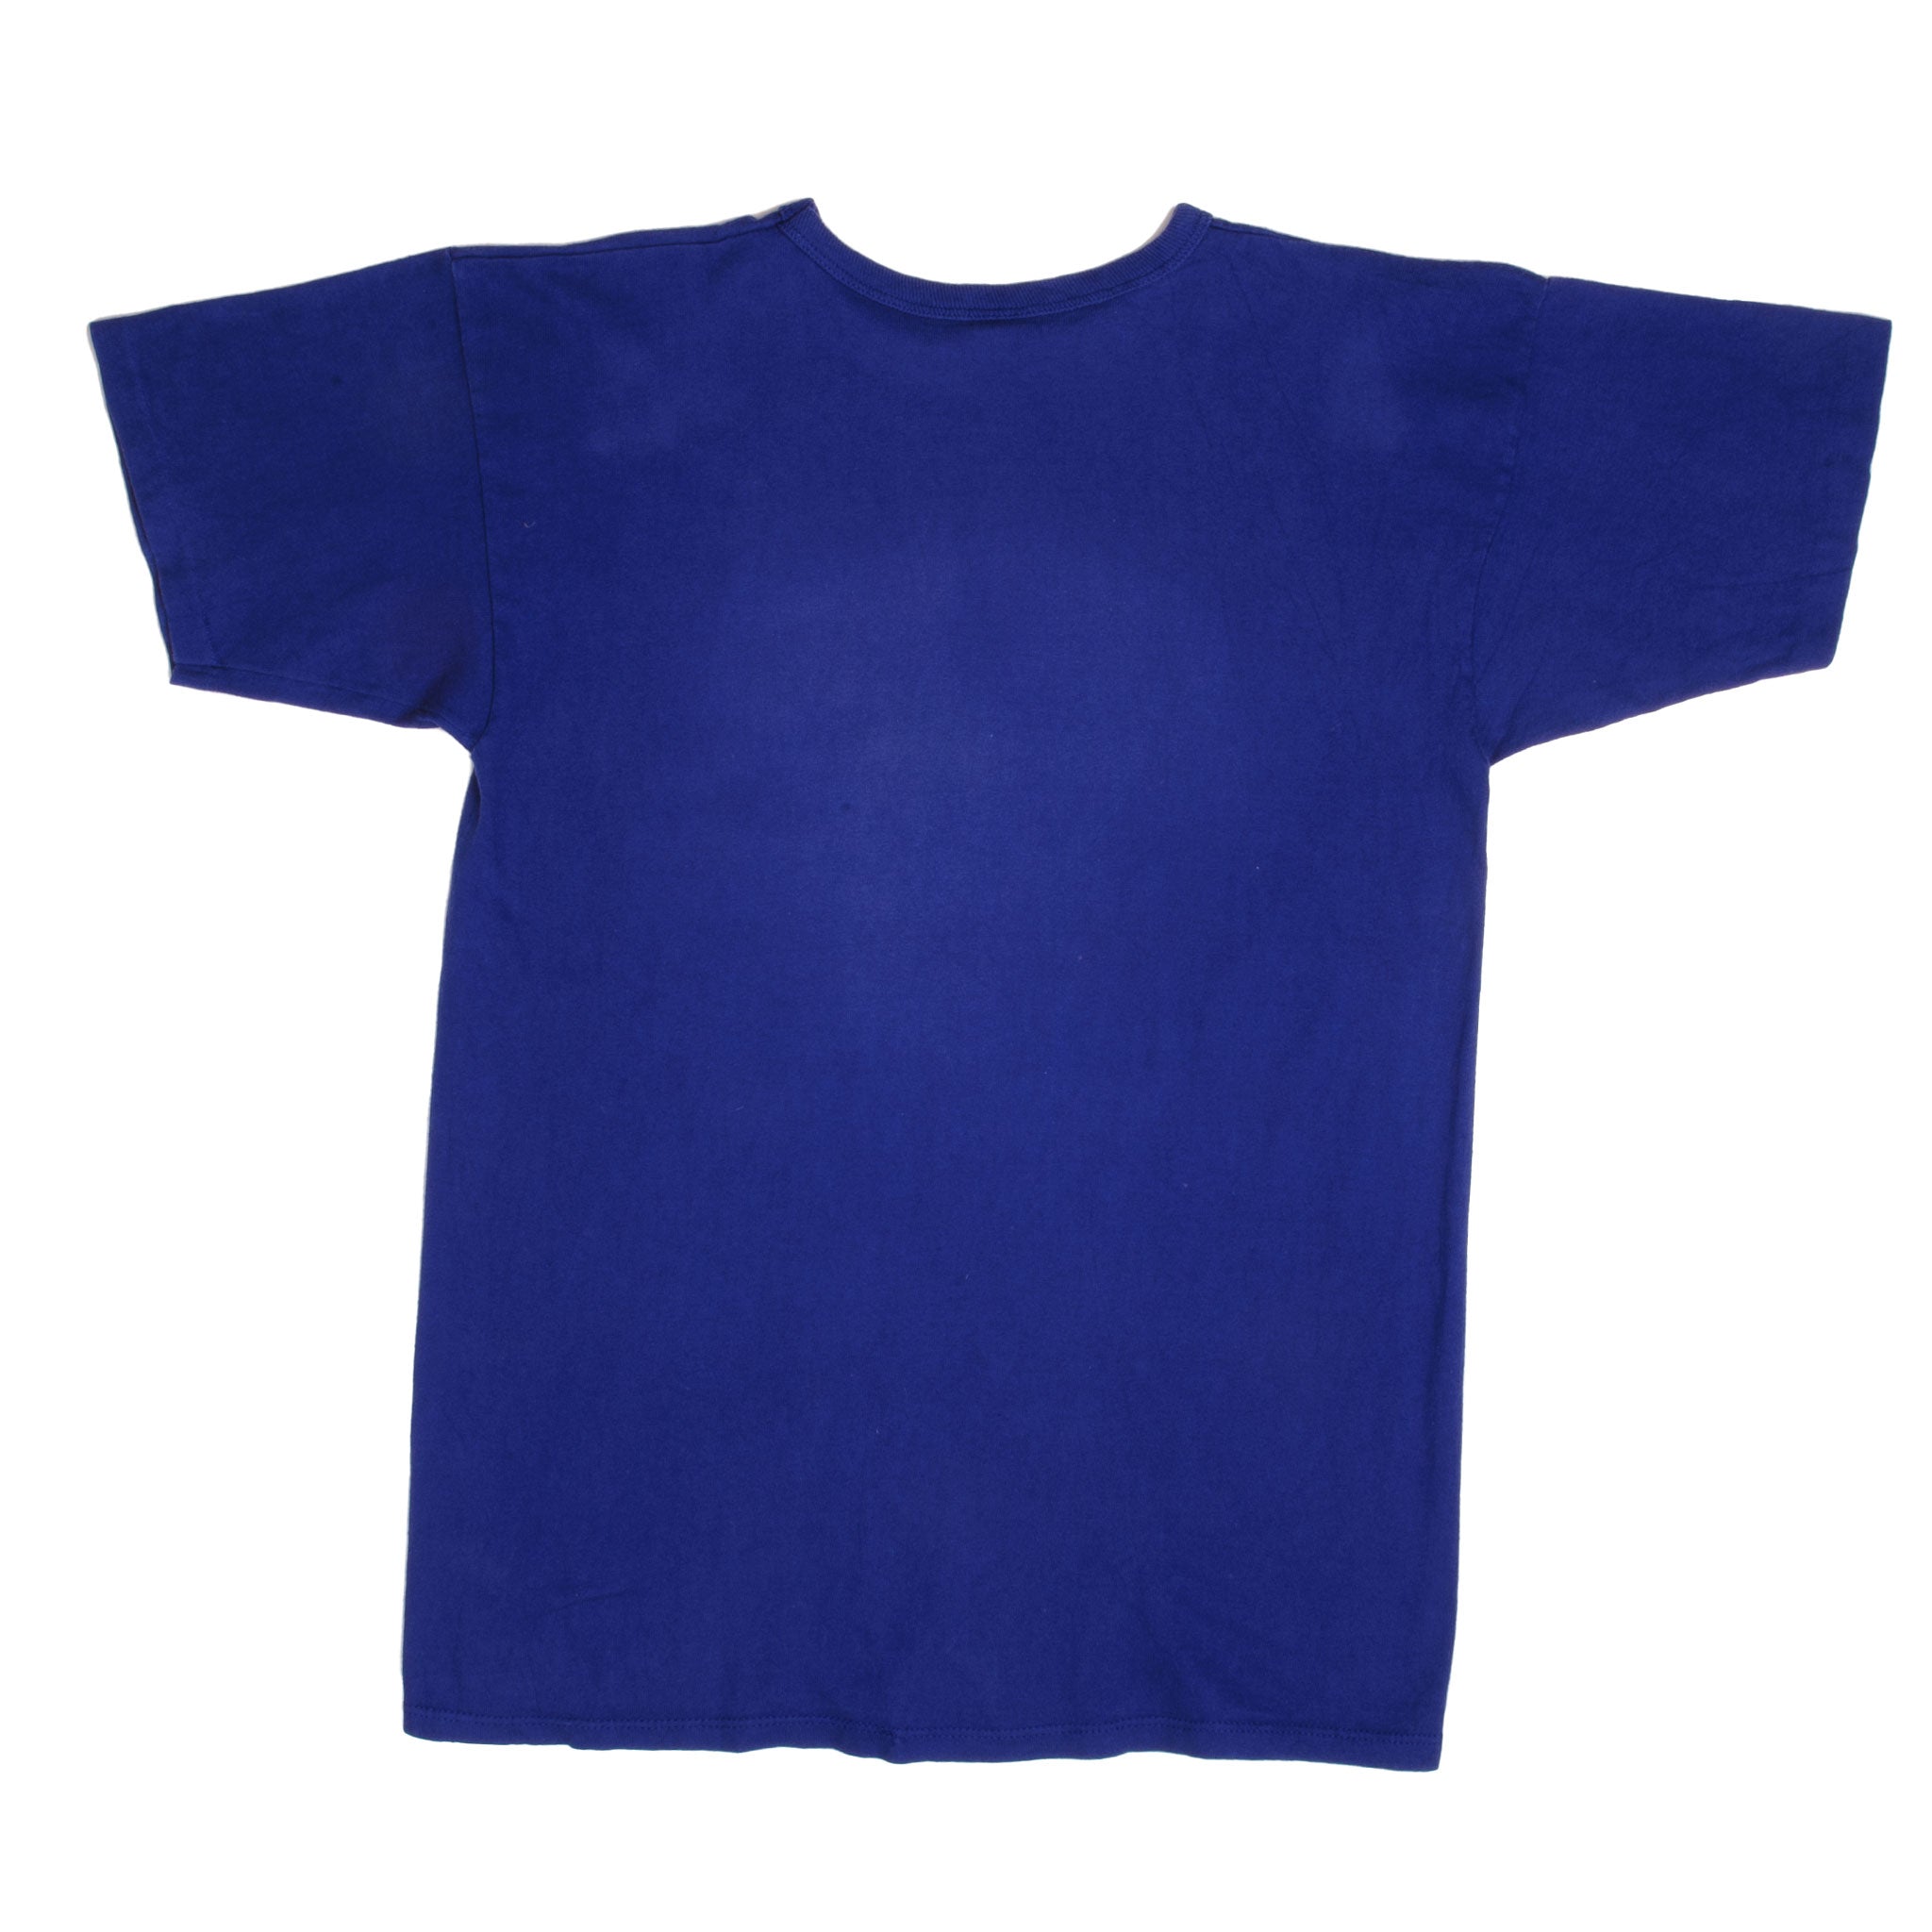 MLB Baseball New York Mets Champion Shirt Long Sleeve T-Shirt